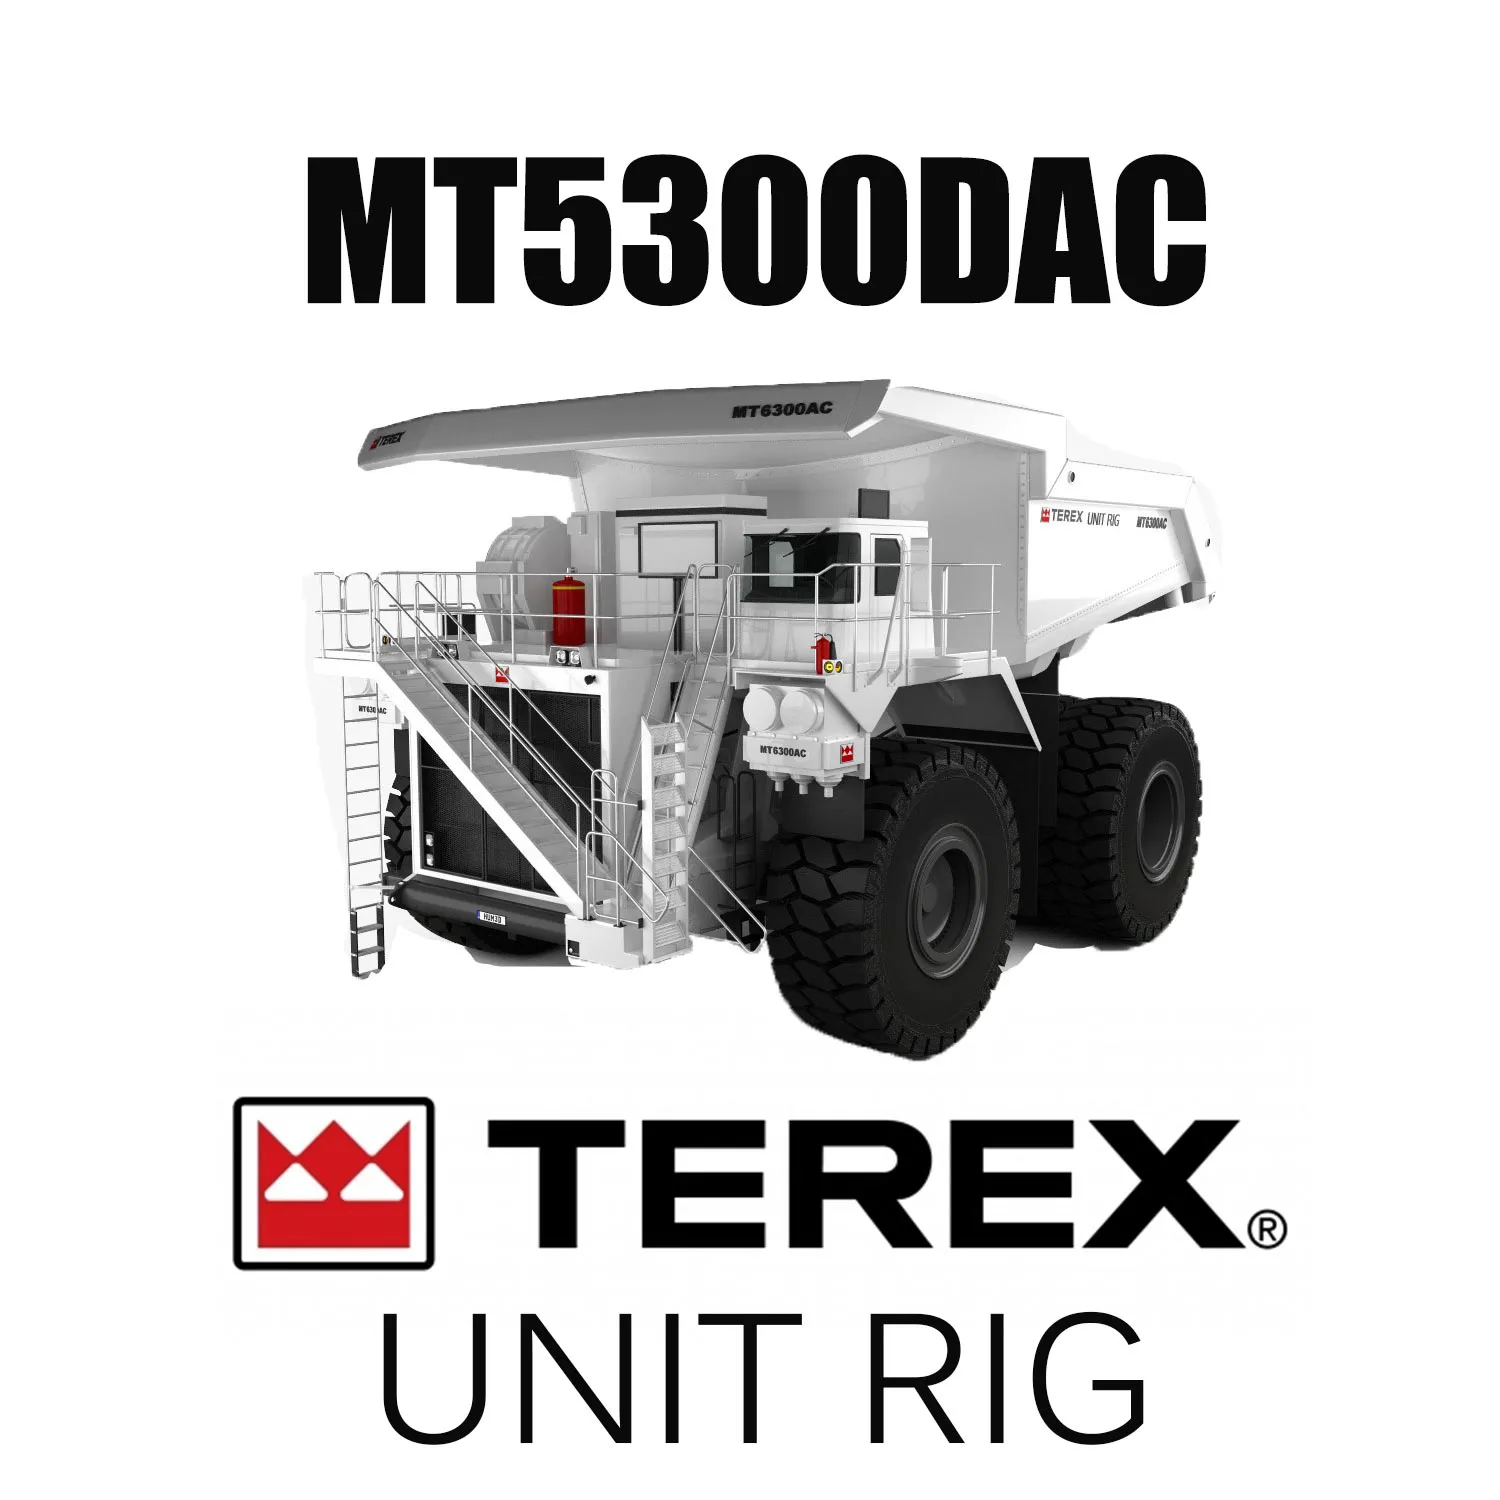 Gigantische 63-inch grondverzetmachine OTR-banden 53/80R63 voor mijnbouwapparatuur UNIT RIG MT5300DAC